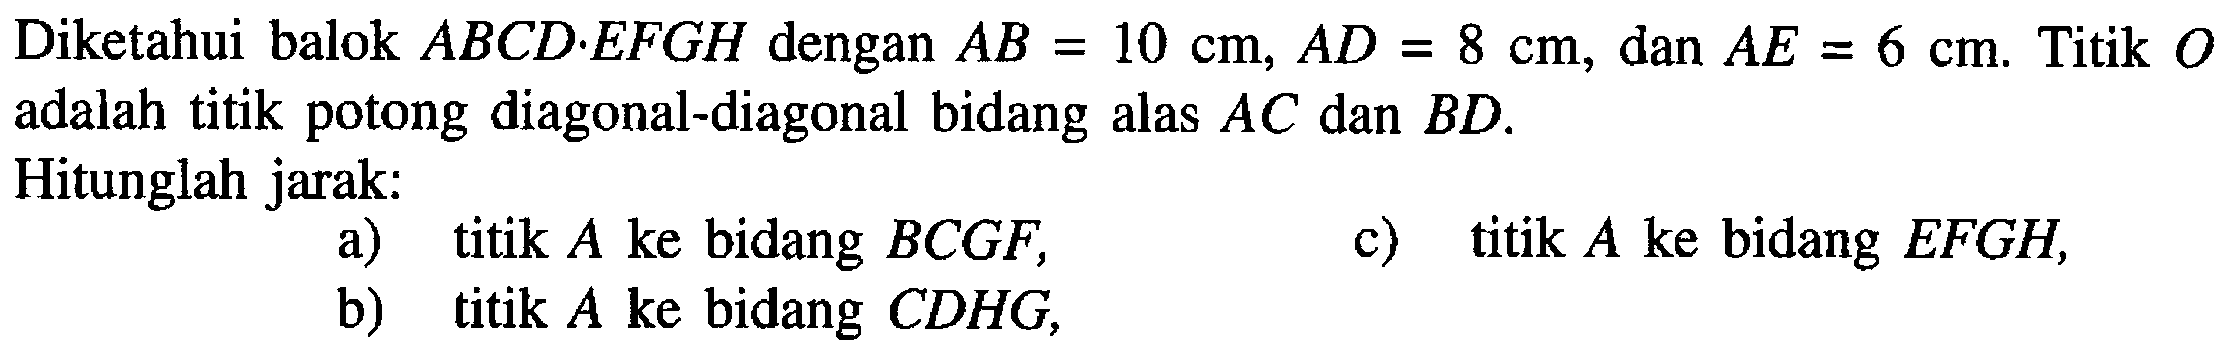 Diketahui balok ABCD.EFGH dengan AB=10 cm, AD=8 cm, dan AE=6 cm. Titik O adalah titik potong diagonal-diagonal bidang alas AC dan BD. Hitunglah jarak: a) titik A ke bidang BCGF, c) titik A ke bidang EFGH, b) titik A ke bidang CDHG.